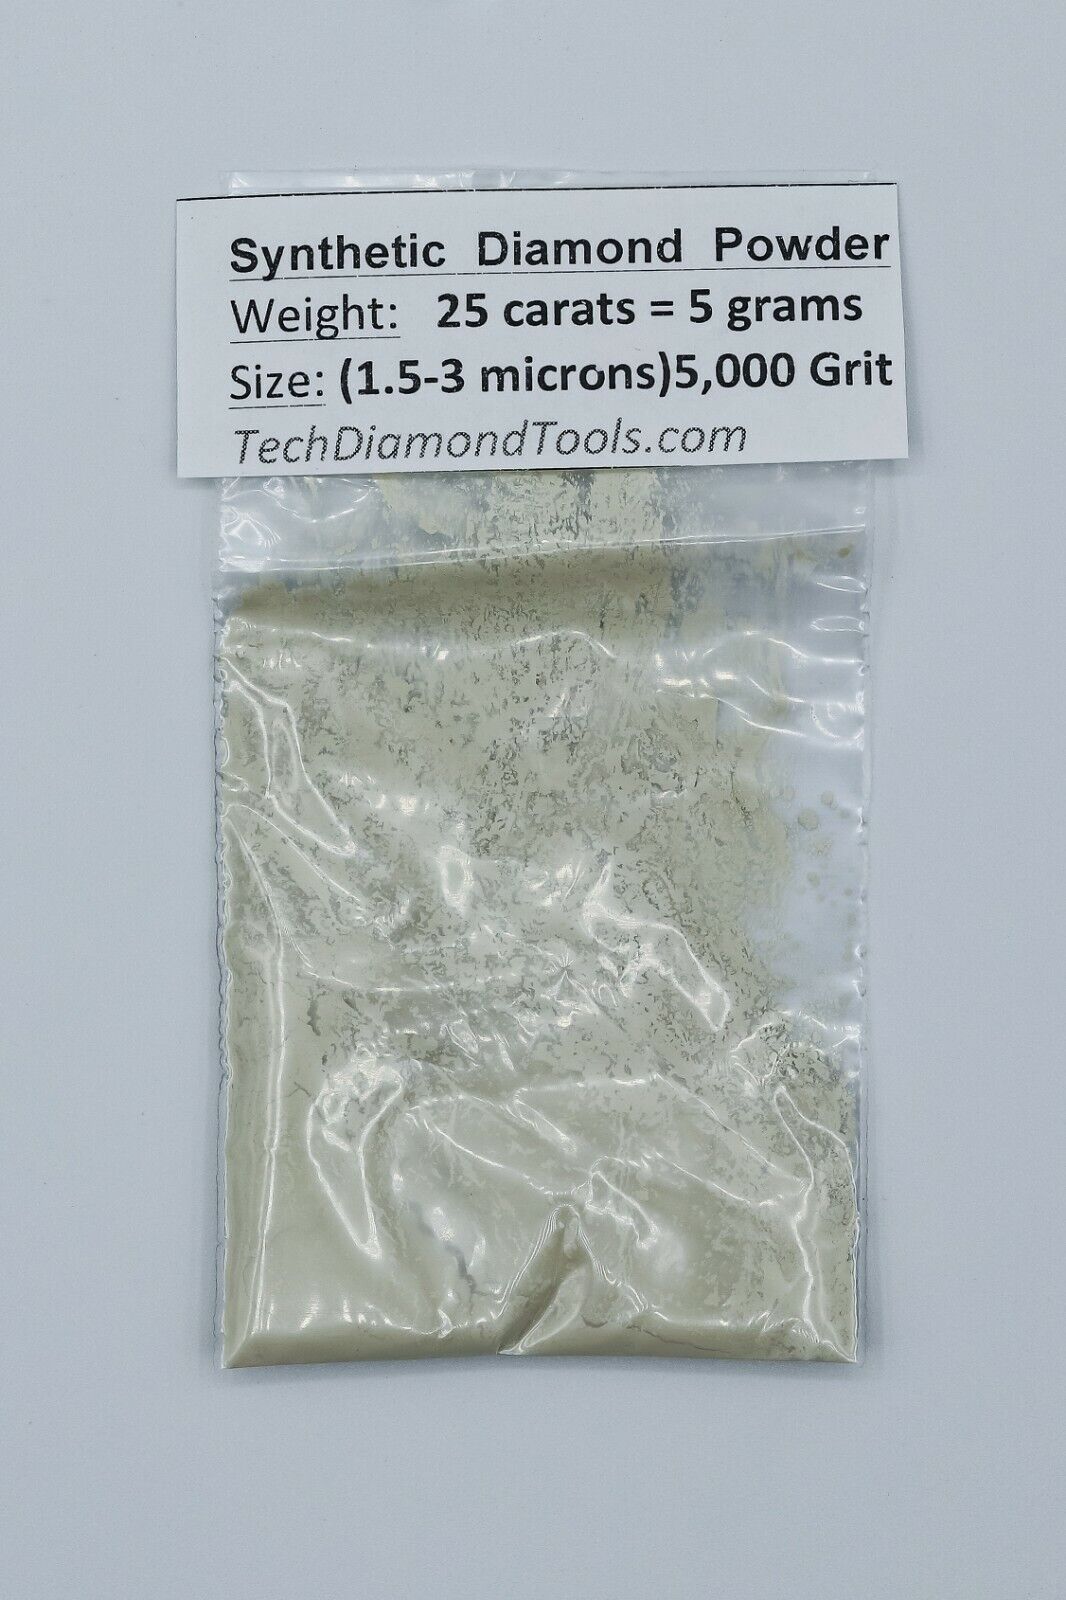 Diamond Micron Powder 5,000 Grit Mesh (1.5-3 Micron), Weight 25 Carat = 5 Grams